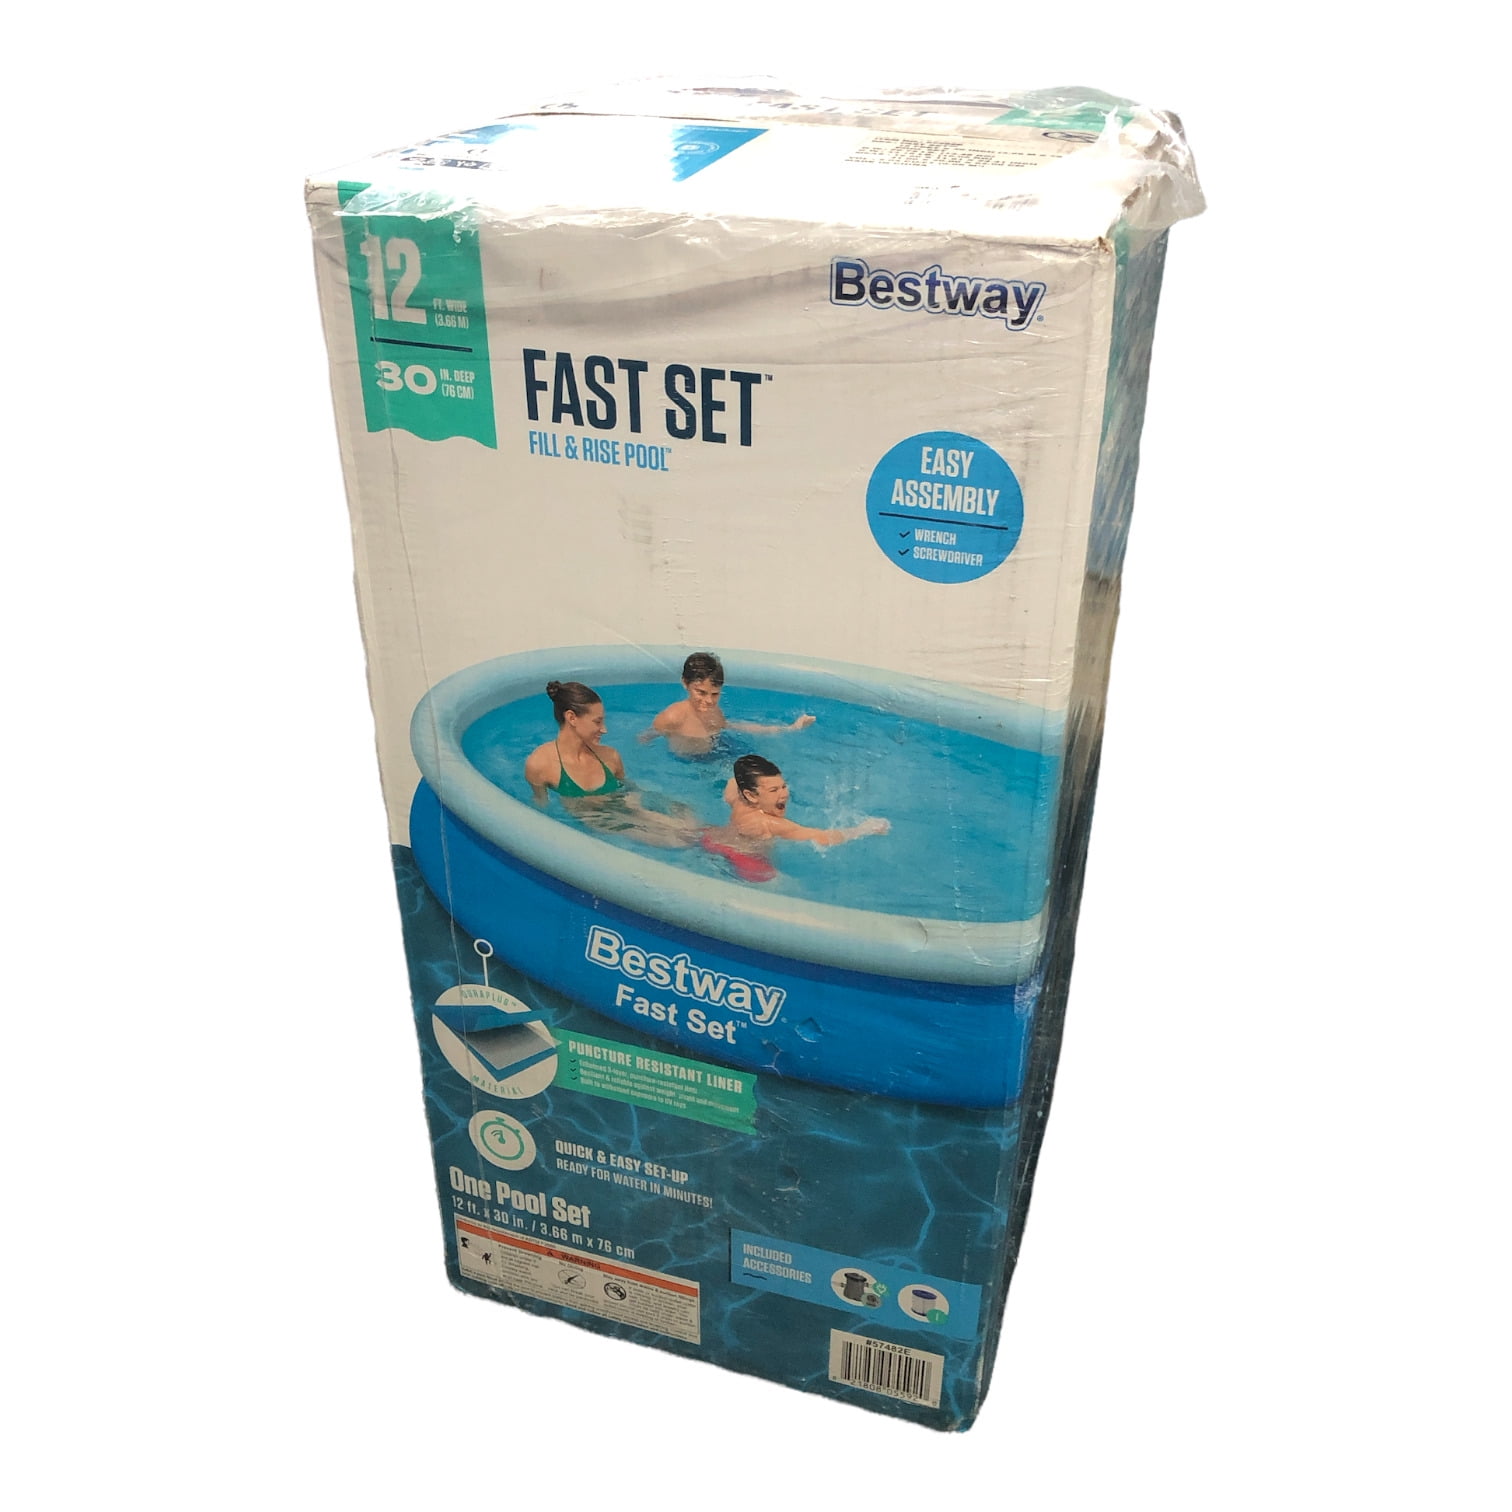 Bestway Fast Set Round Inflatable Pool Set Includes filter pump - Walmart.com